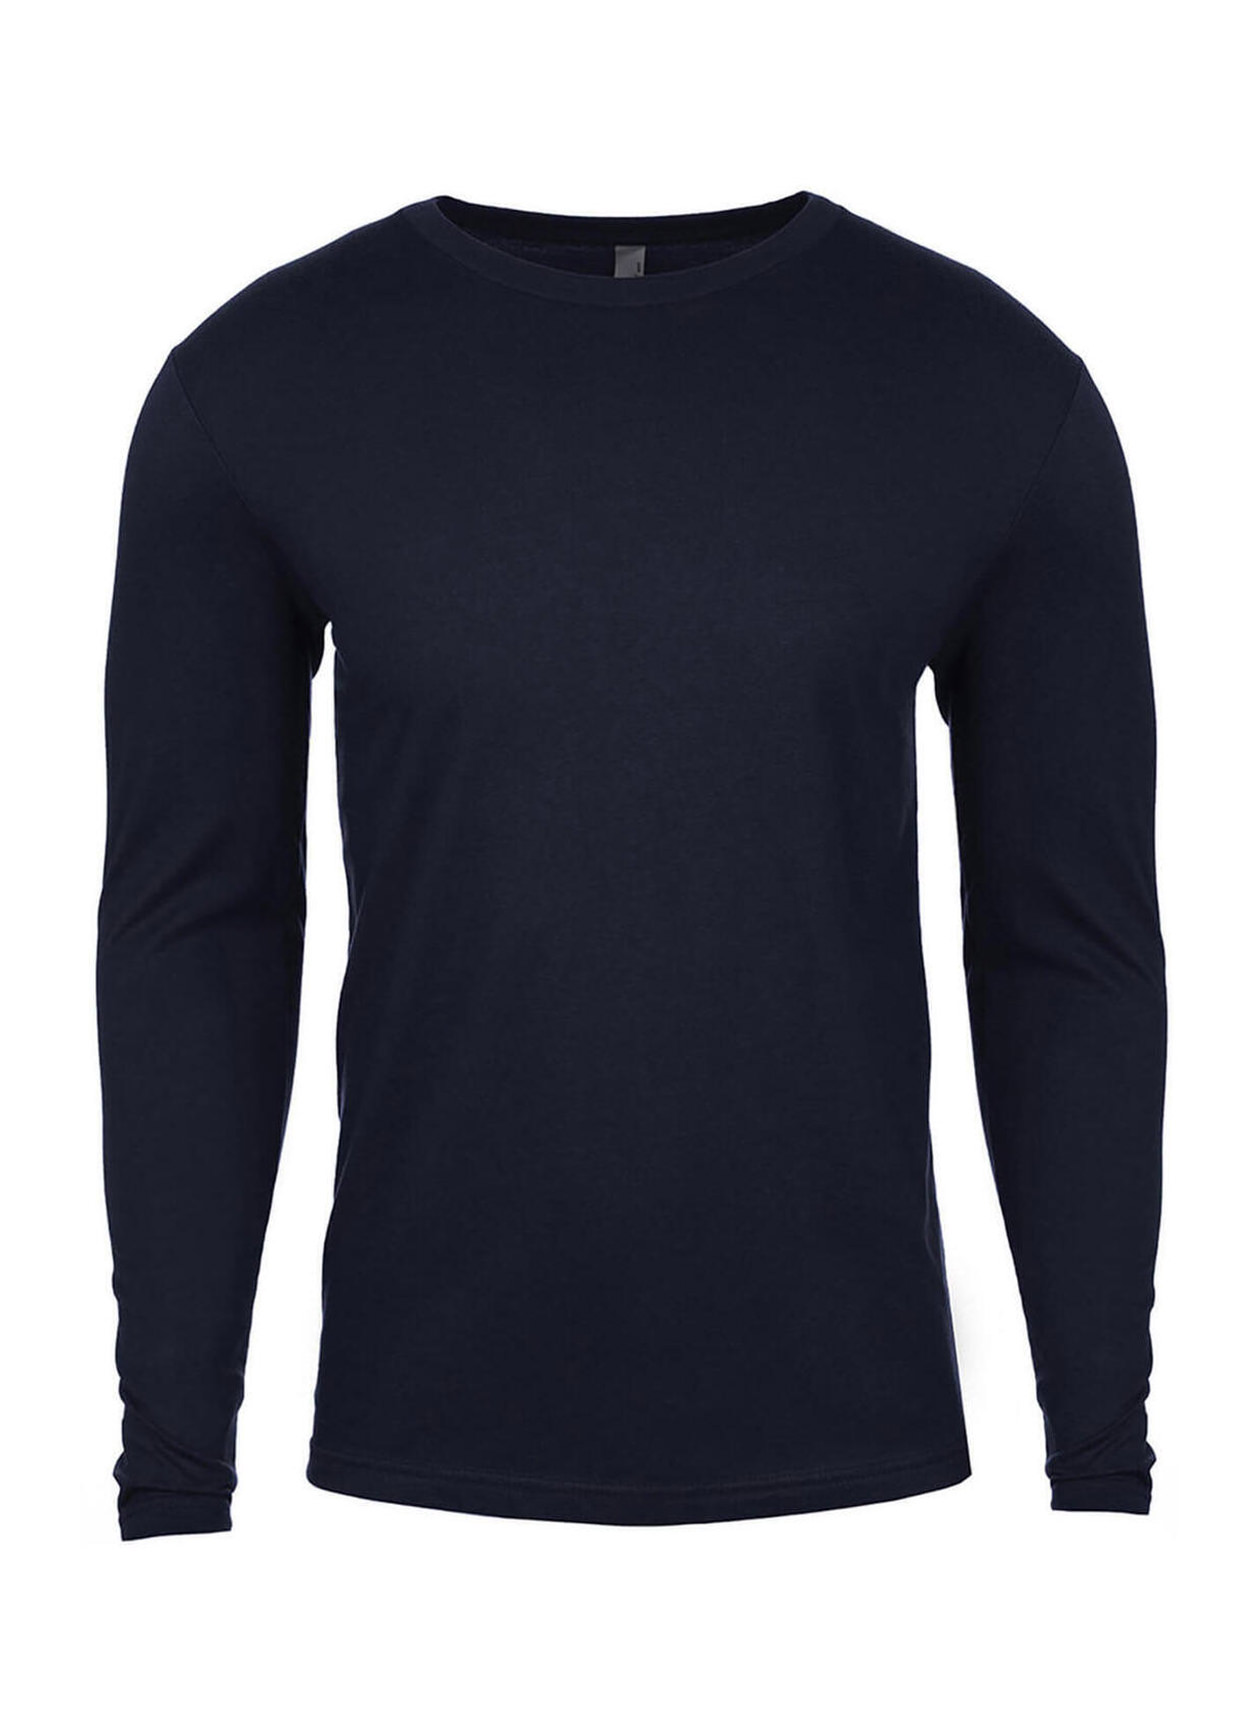 Branded Next Level Men's Midnight Navy Cotton Long-Sleeve Crew T-Shirt ...